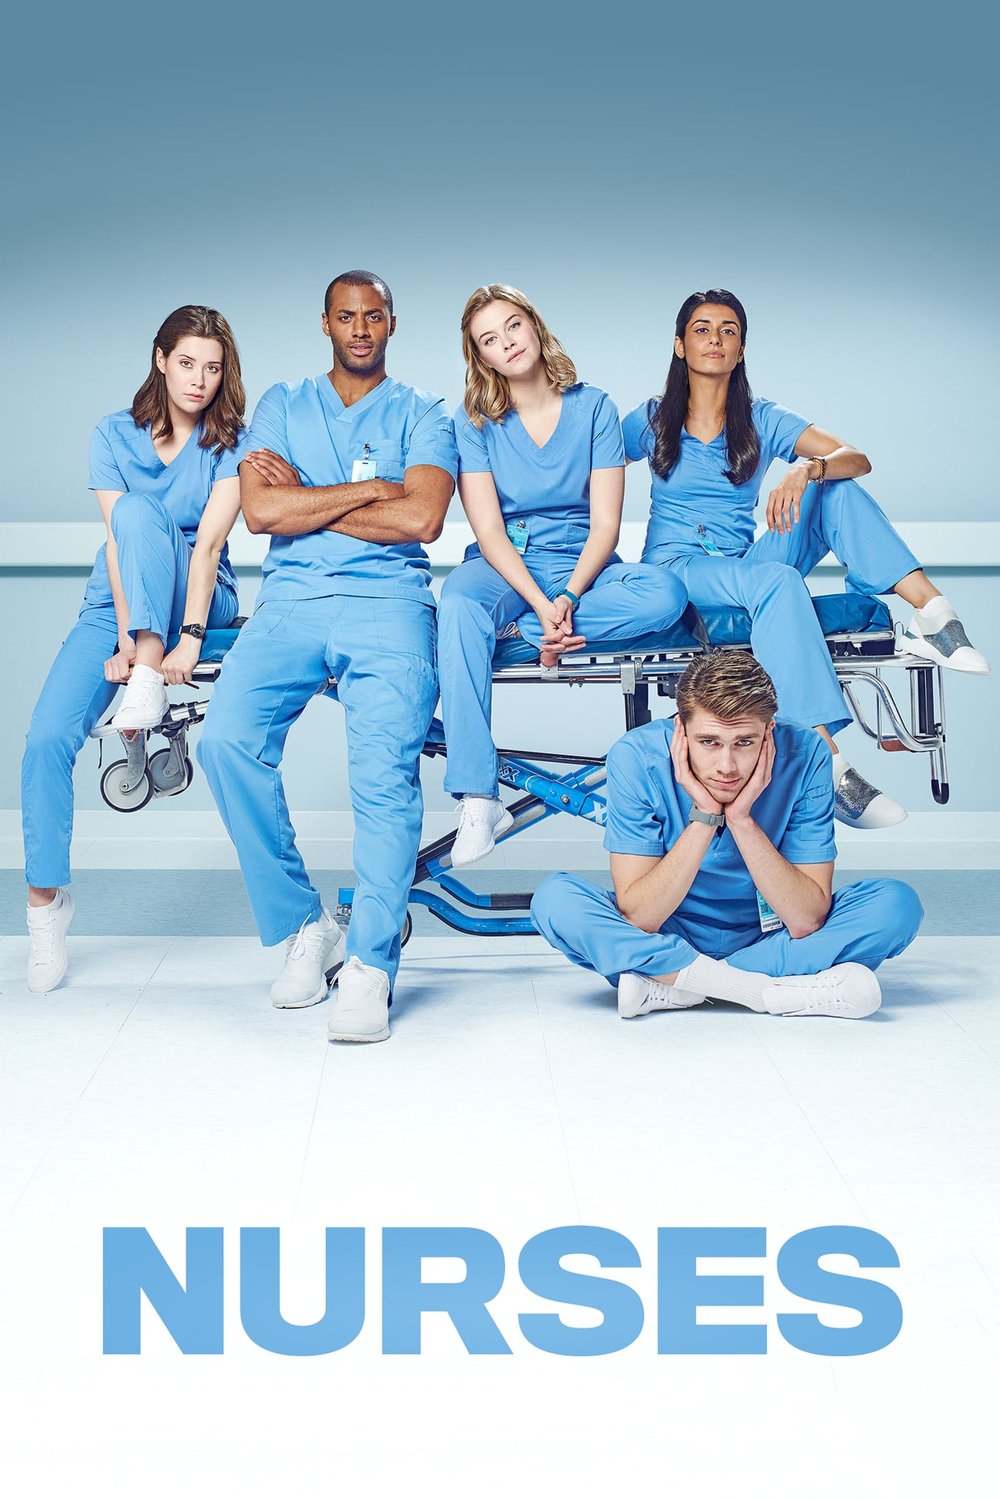 Poster of the movie Nurses